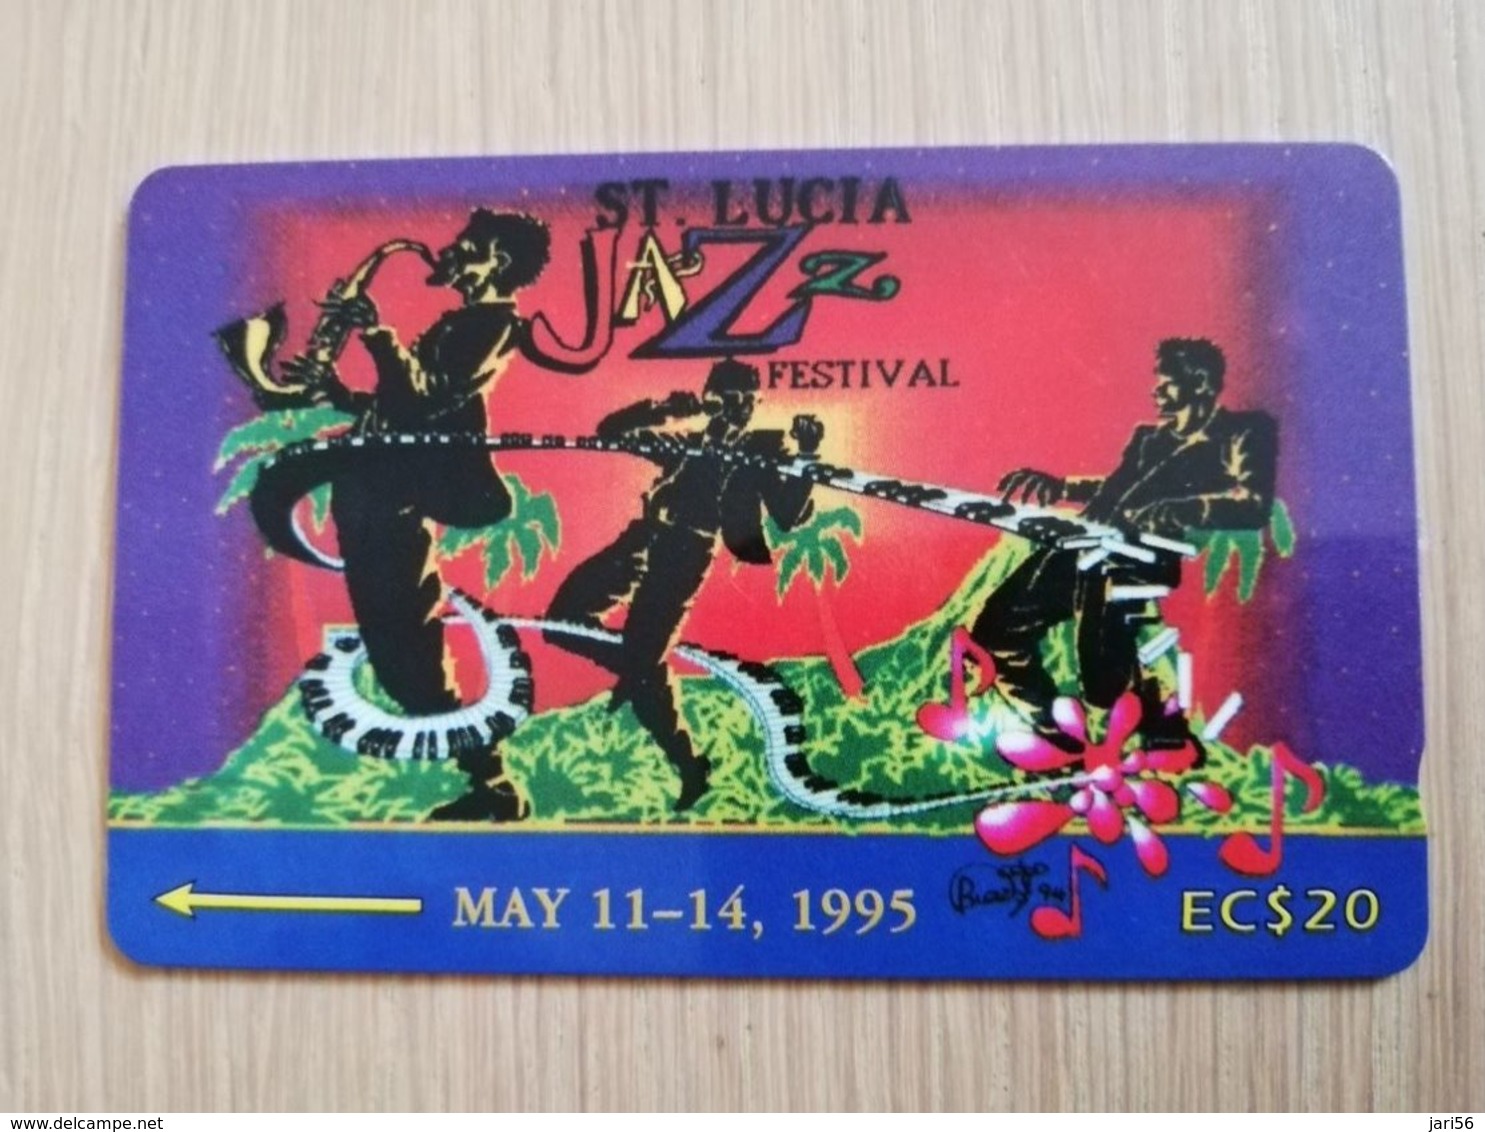 ST LUCIA    $ 20   CABLE & WIRELESS  STL-19A  19CSLA      JAZZ FESTIVAL 1995  Fine Used Card ** 2419** - Saint Lucia